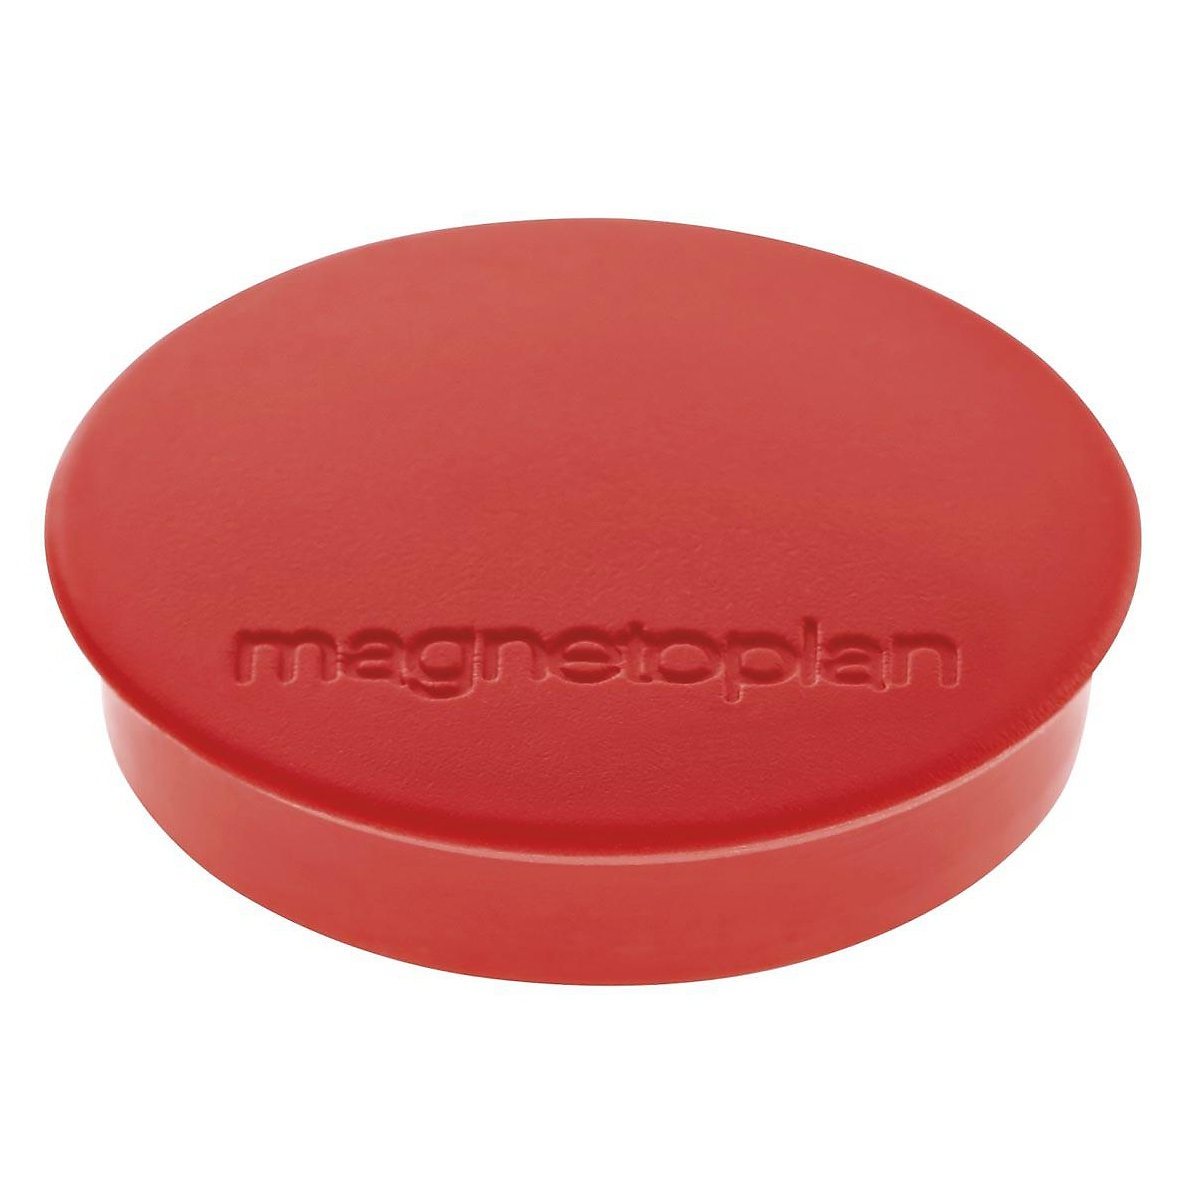 Magnet DISCOFIX STANDARD magnetoplan, Ø 30 mm, VE 80 Stk, rot-3